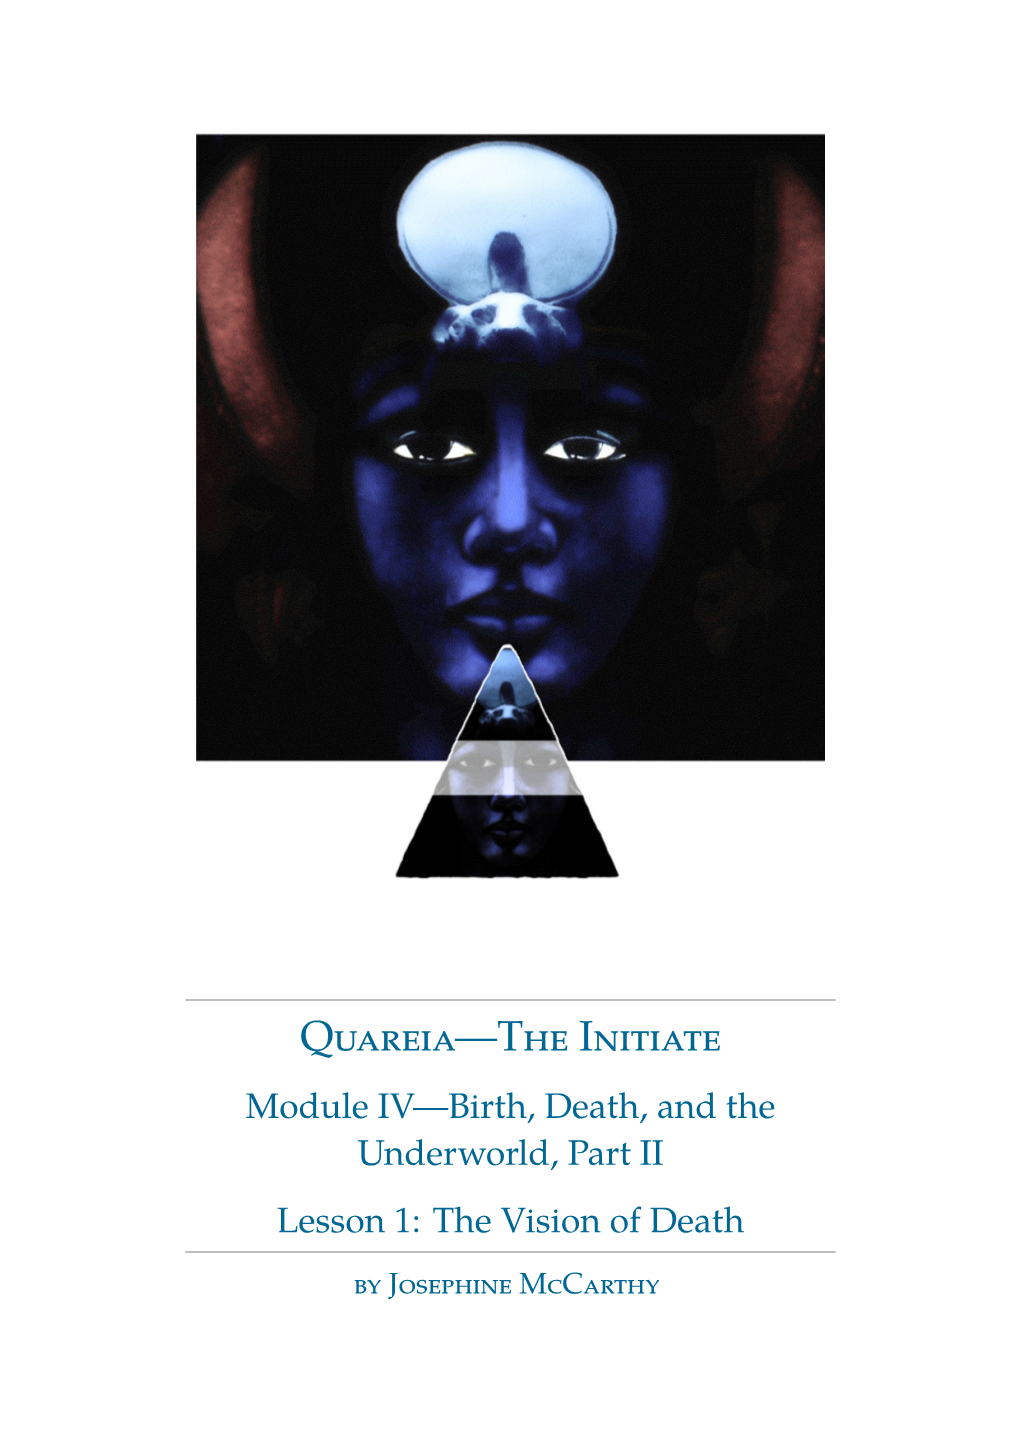 Quareia—The Initiate Module IV—Birth, Death, and the Underworld, Part II Lesson 1: the Vision of Death